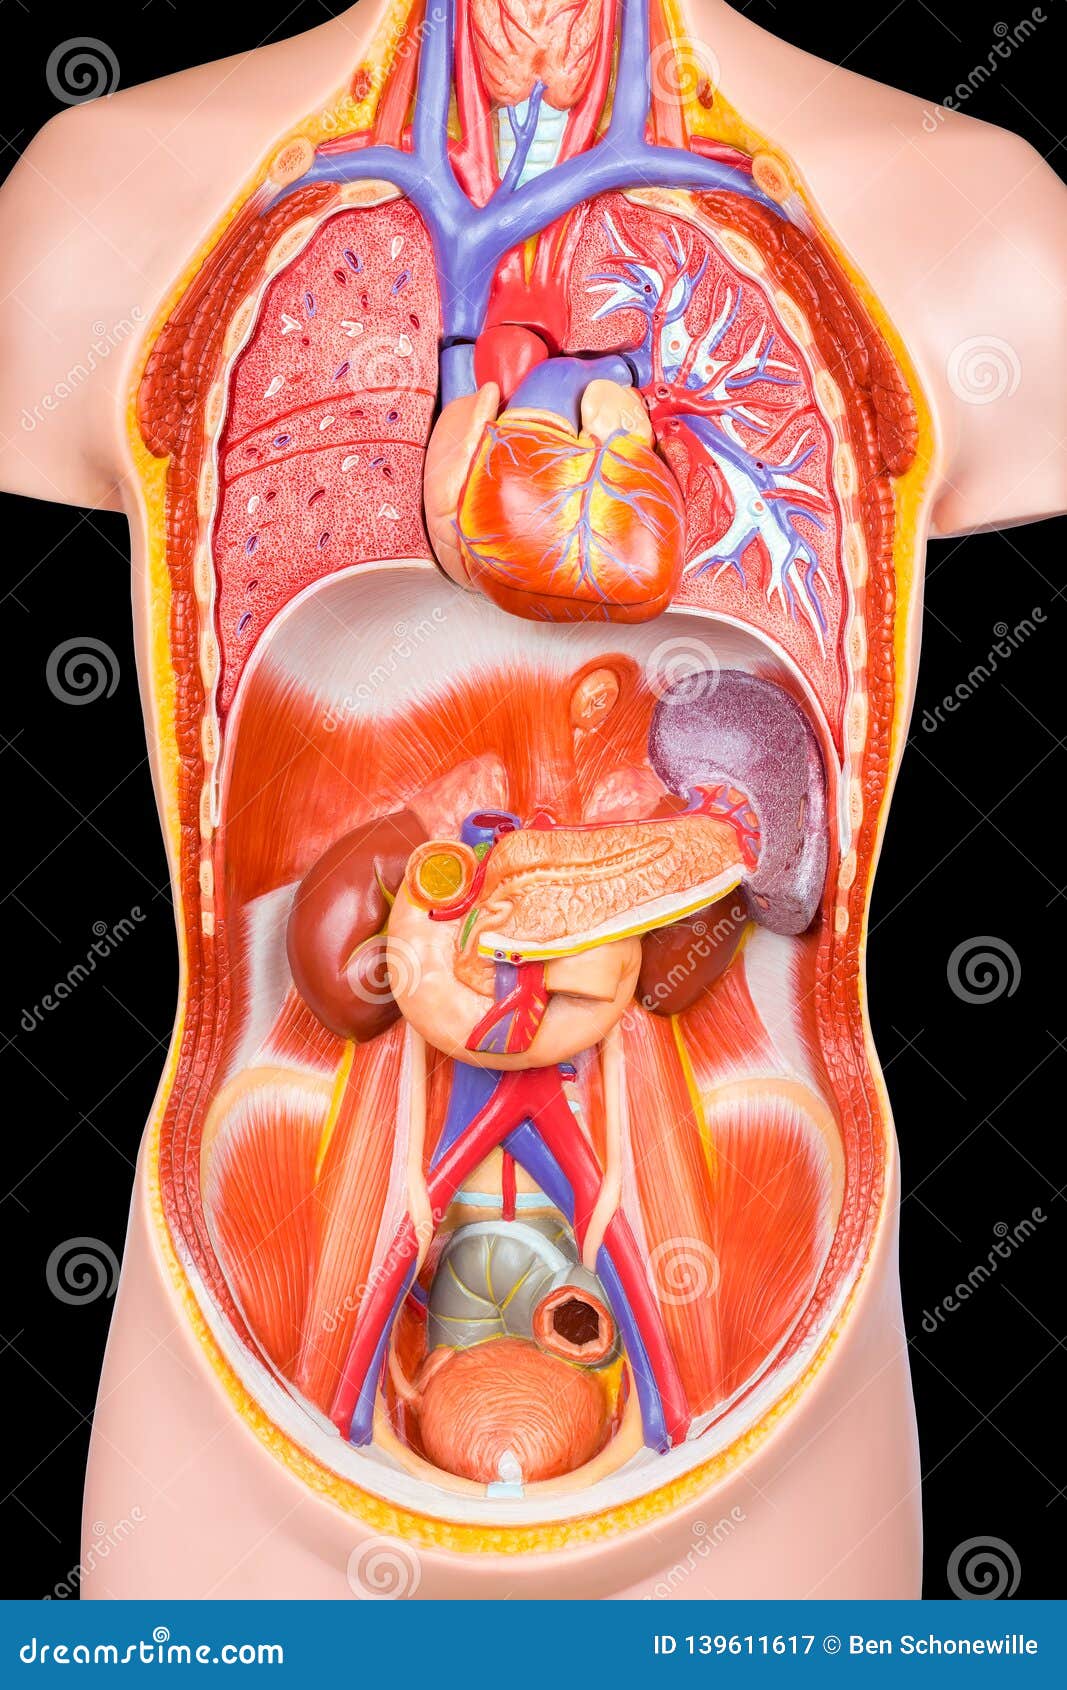 Torso Model Anatomy Labeled - Tissues And Organs The Human Body Merck Manual Home Edition Human ...